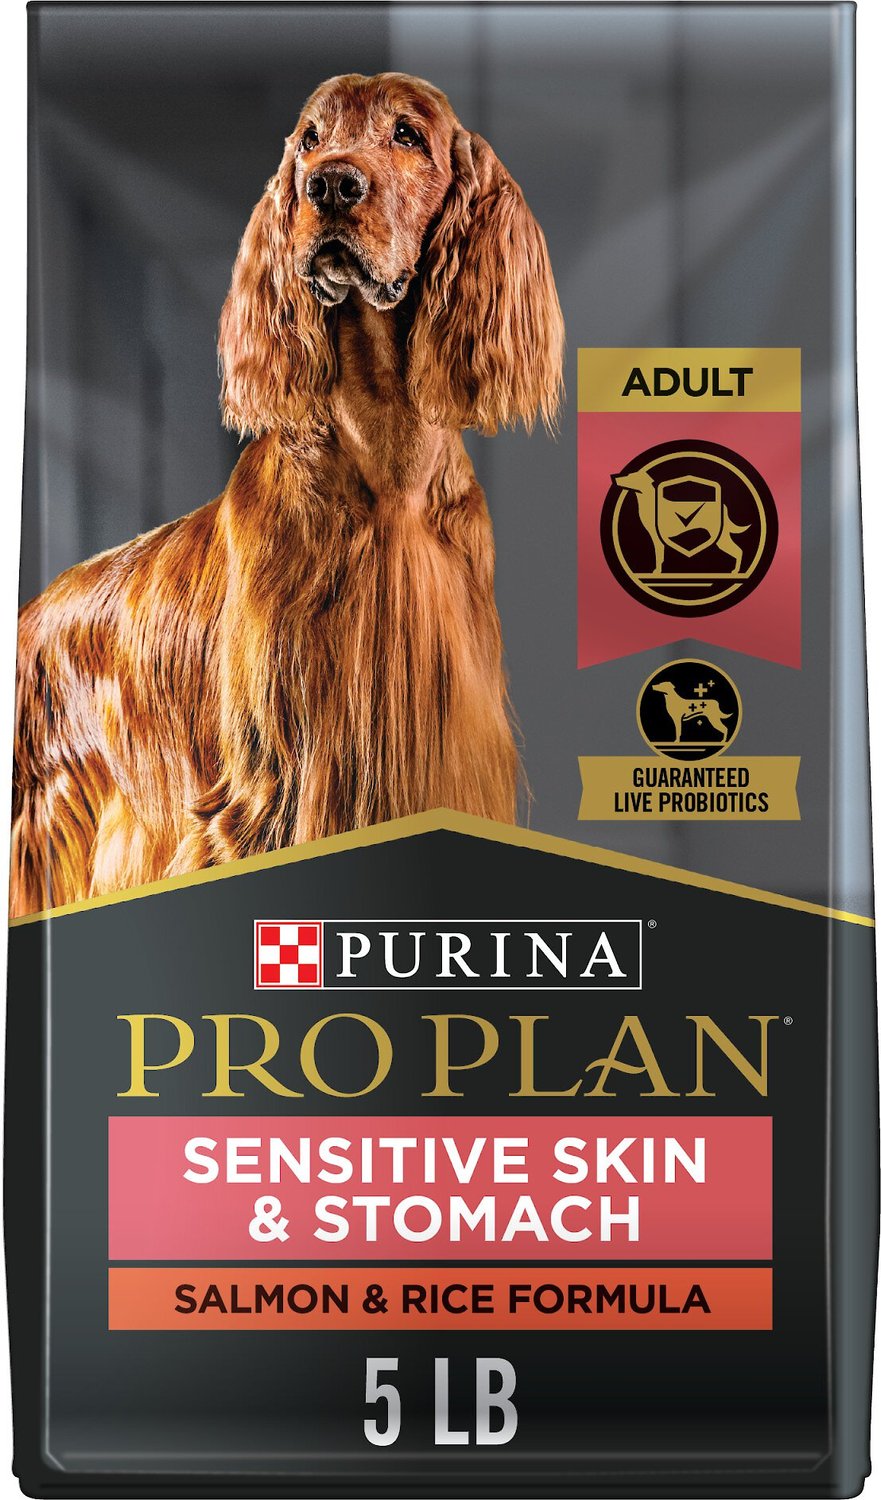 pro plan dog food sensitive skin stomach formula